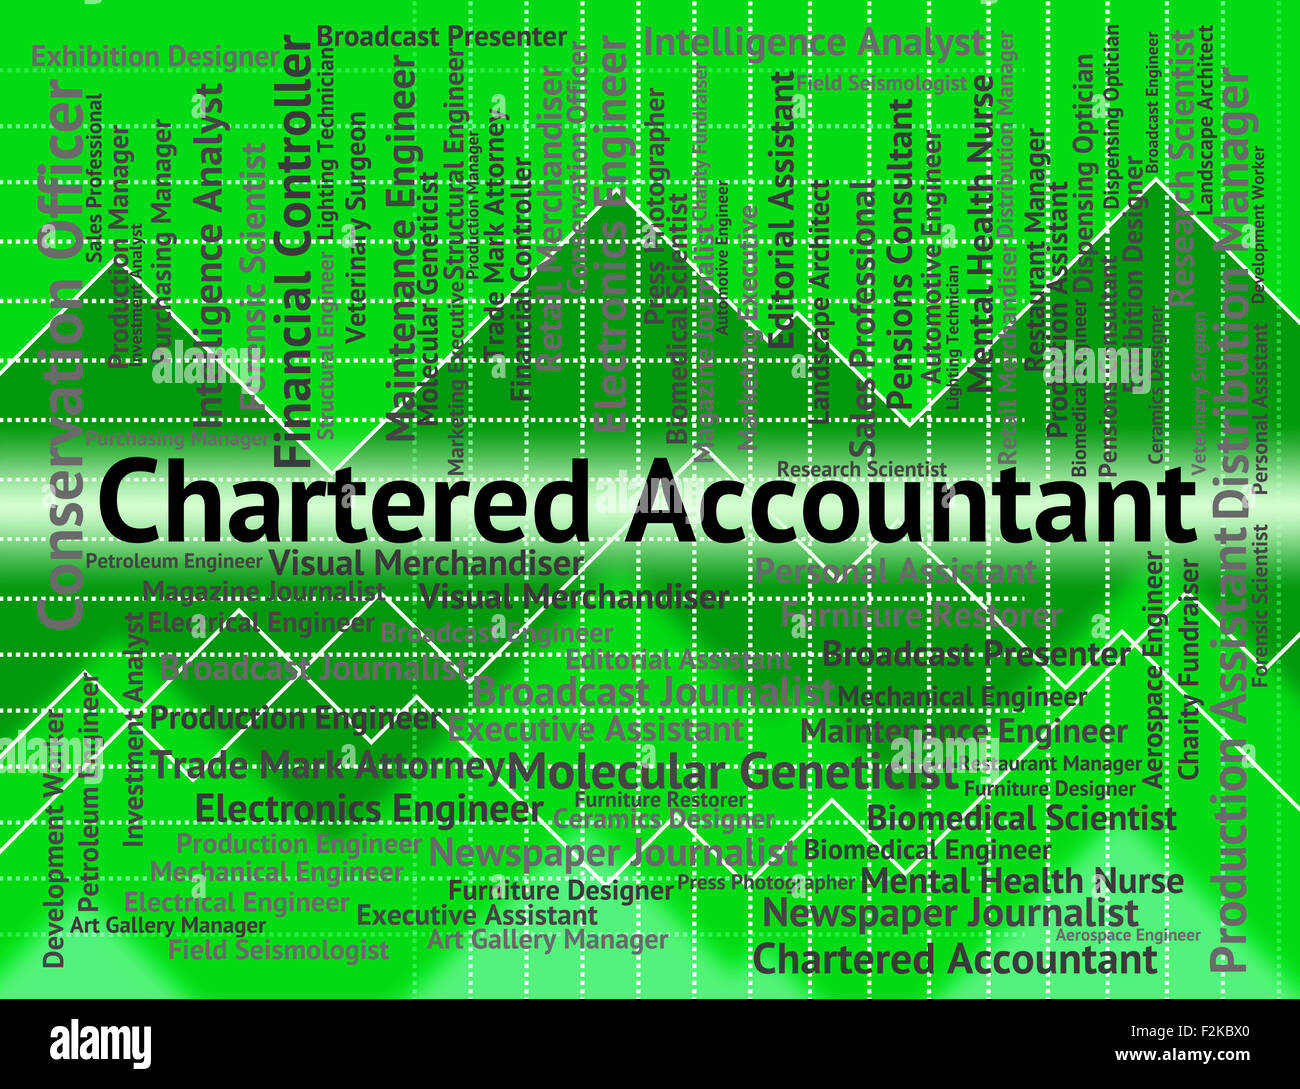 Chartered Accountant Singh Dharmendra  co